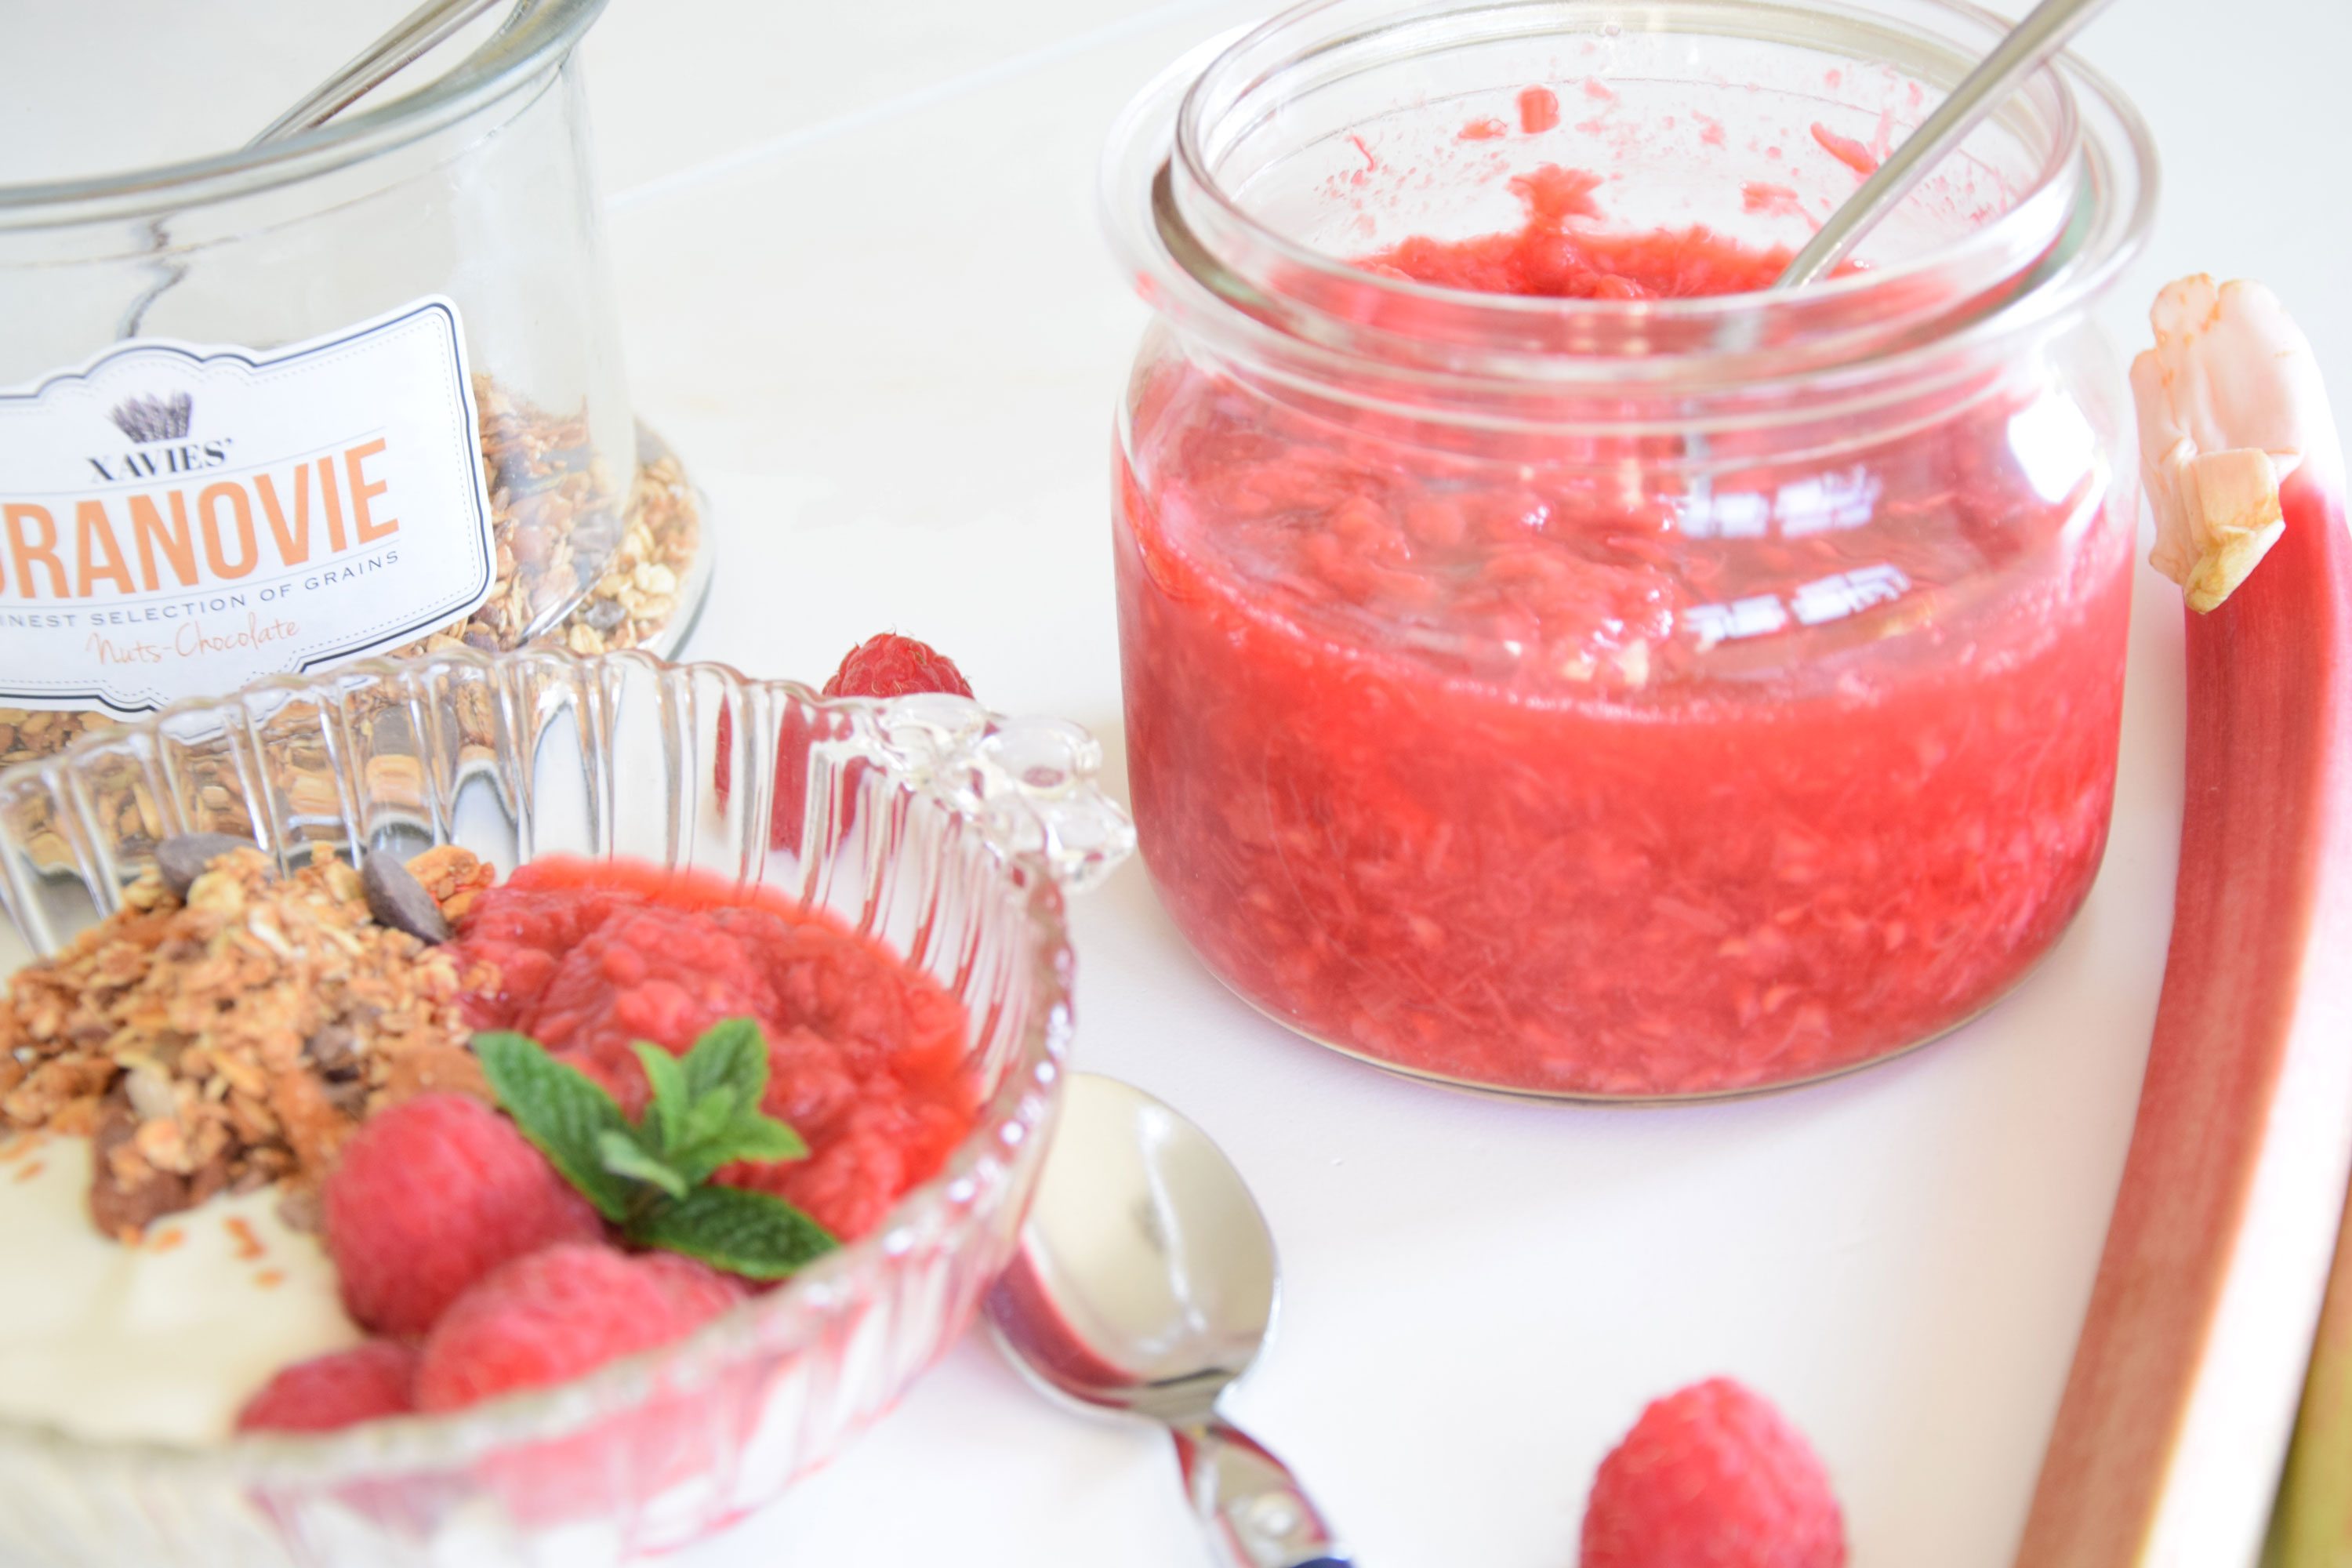 XAVIES' breakfast with rhubarb raspberry compote - XAVIES’